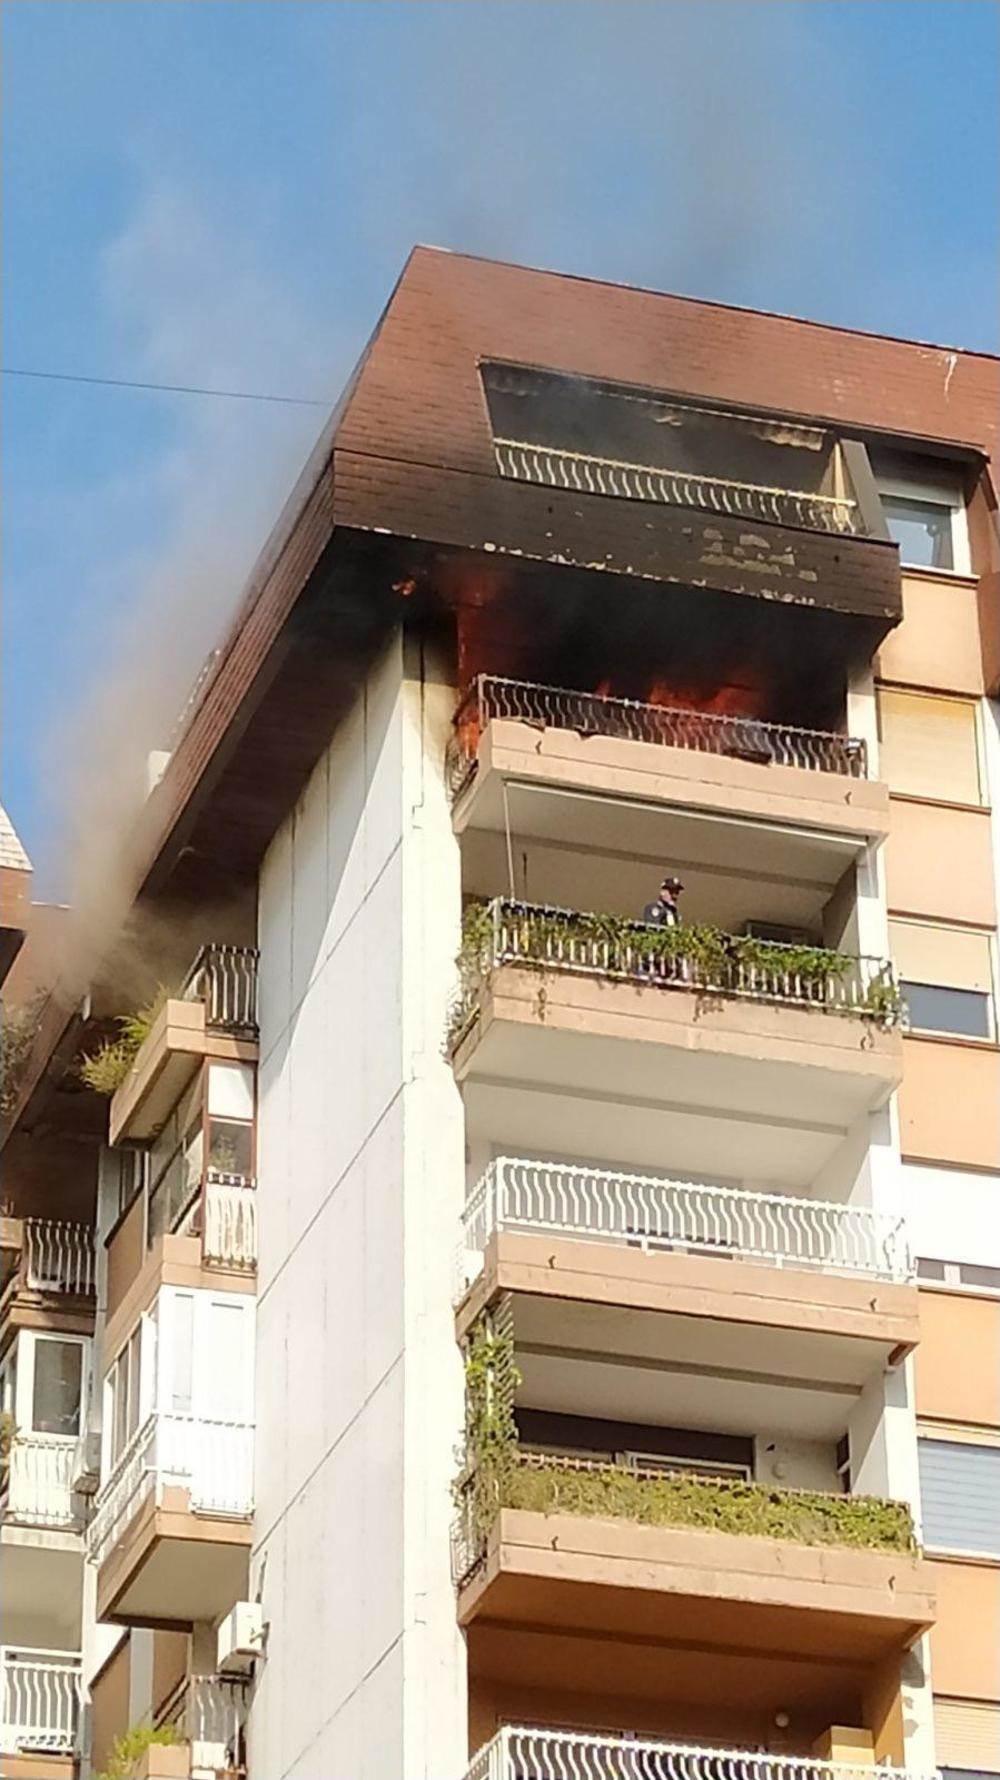  pozar vatrogasci dorcol ulica visokog stevana spasavanje terasa zgrada devojka radnici 